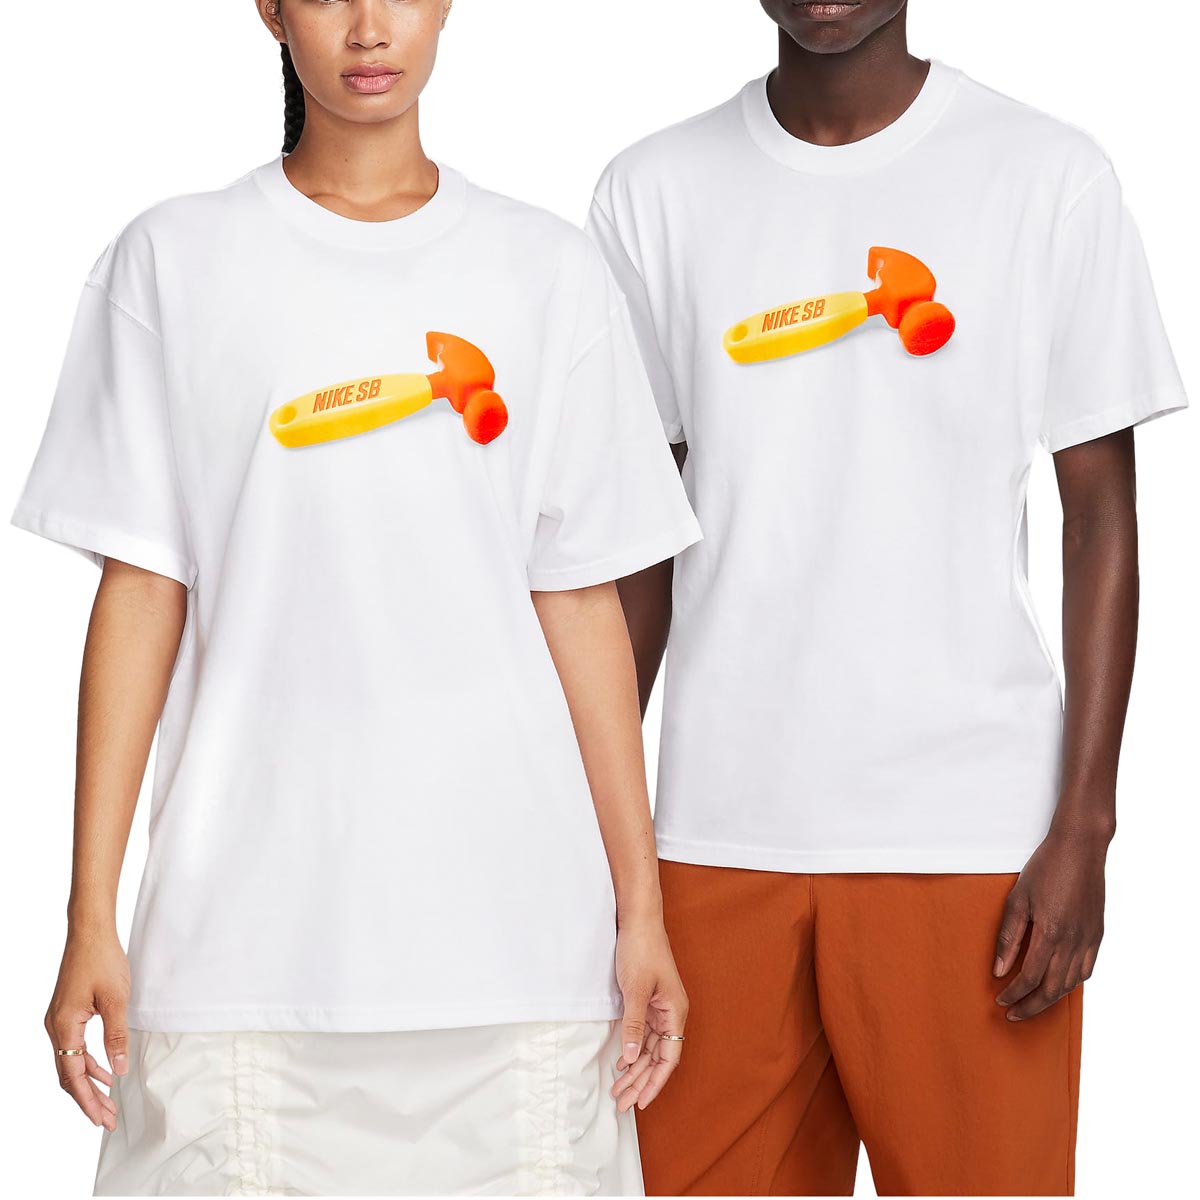 Nike SB Hammer T-Shirt - White image 2